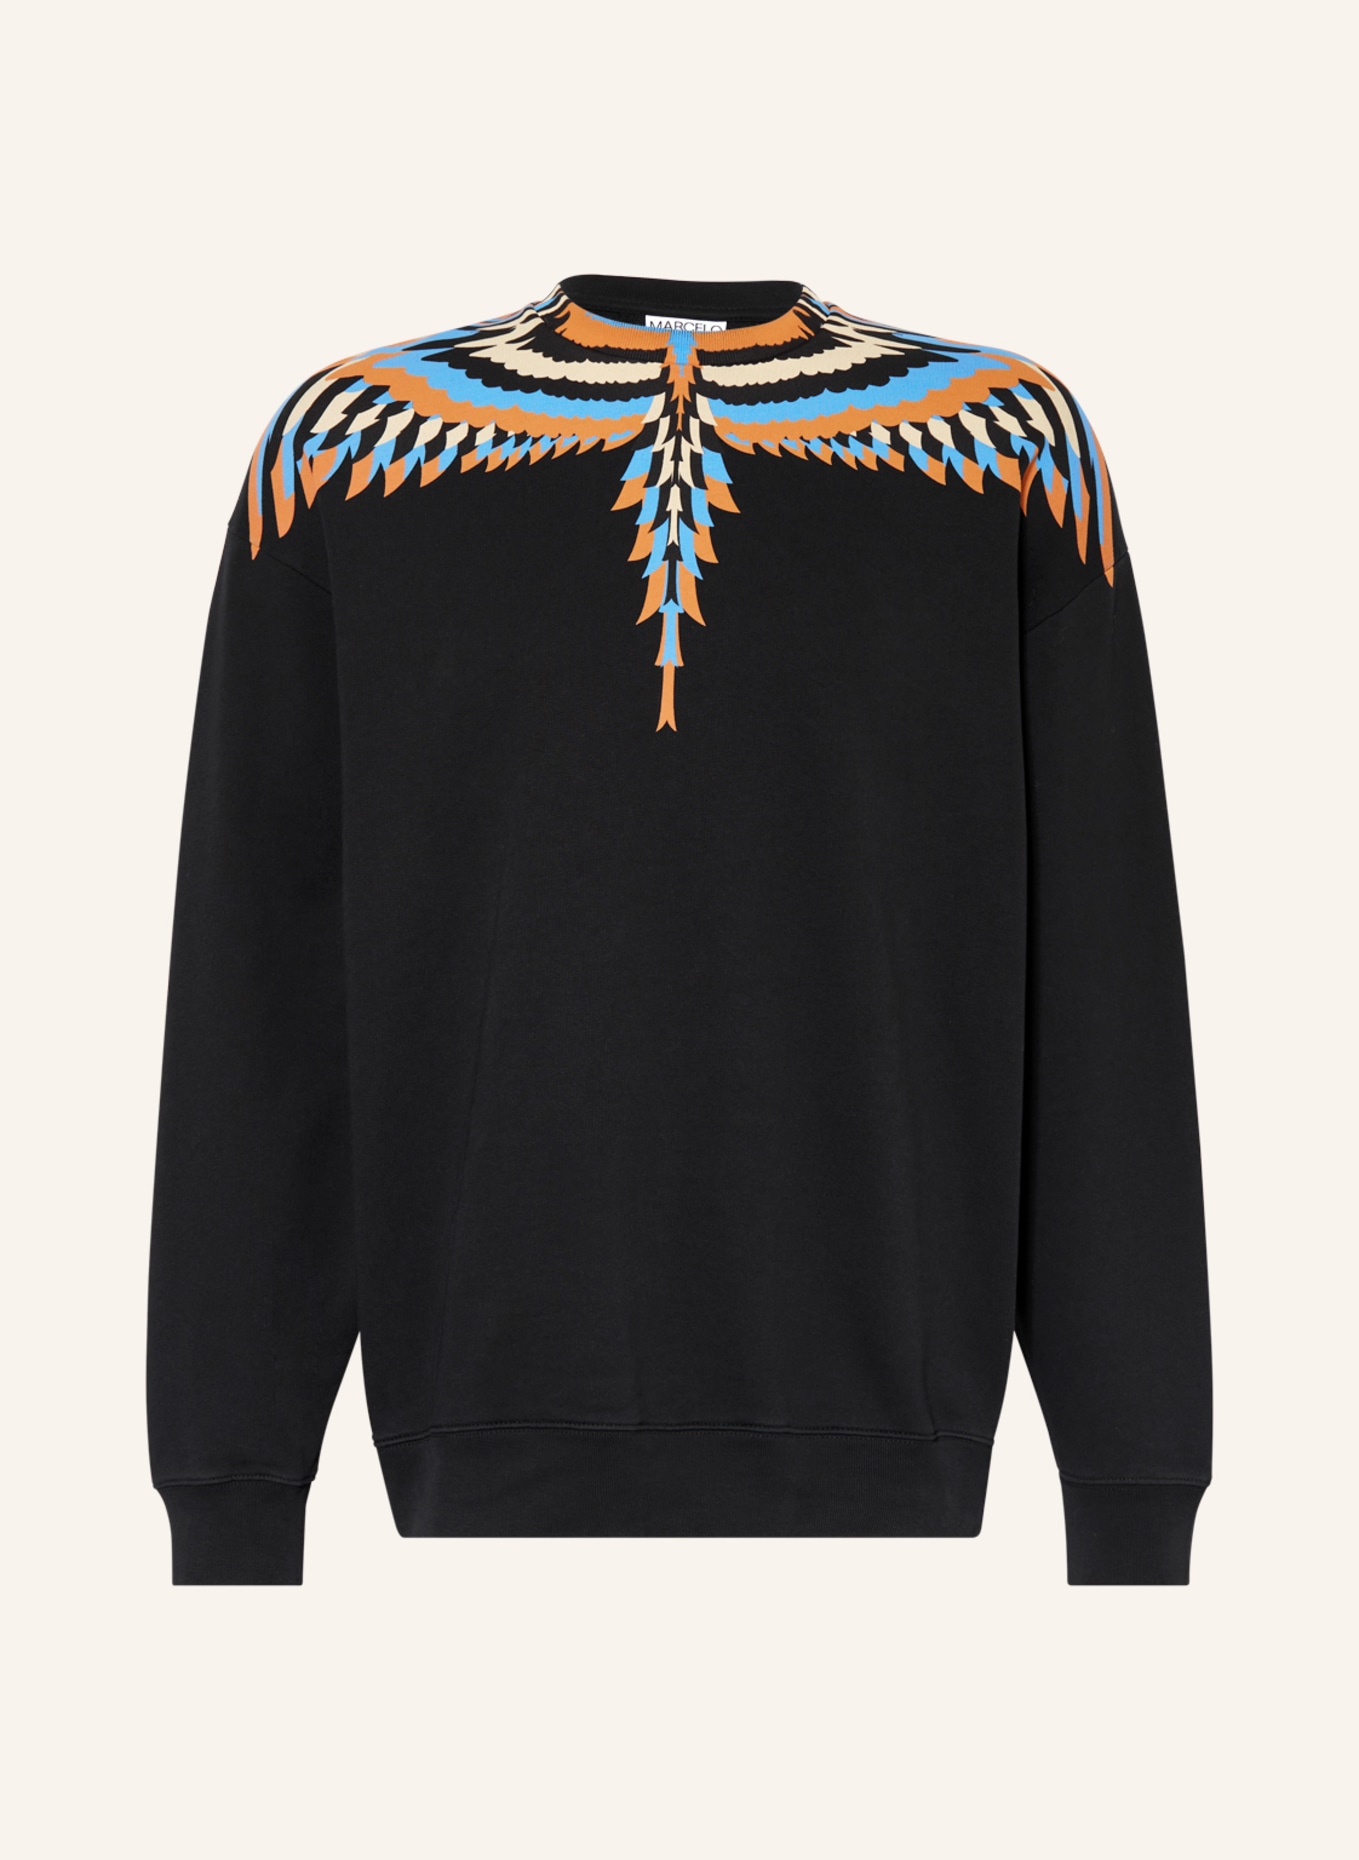 MARCELO BURLON Sweatshirt, Farbe: SCHWARZ/ ORANGE/ BLAU (Bild 1)